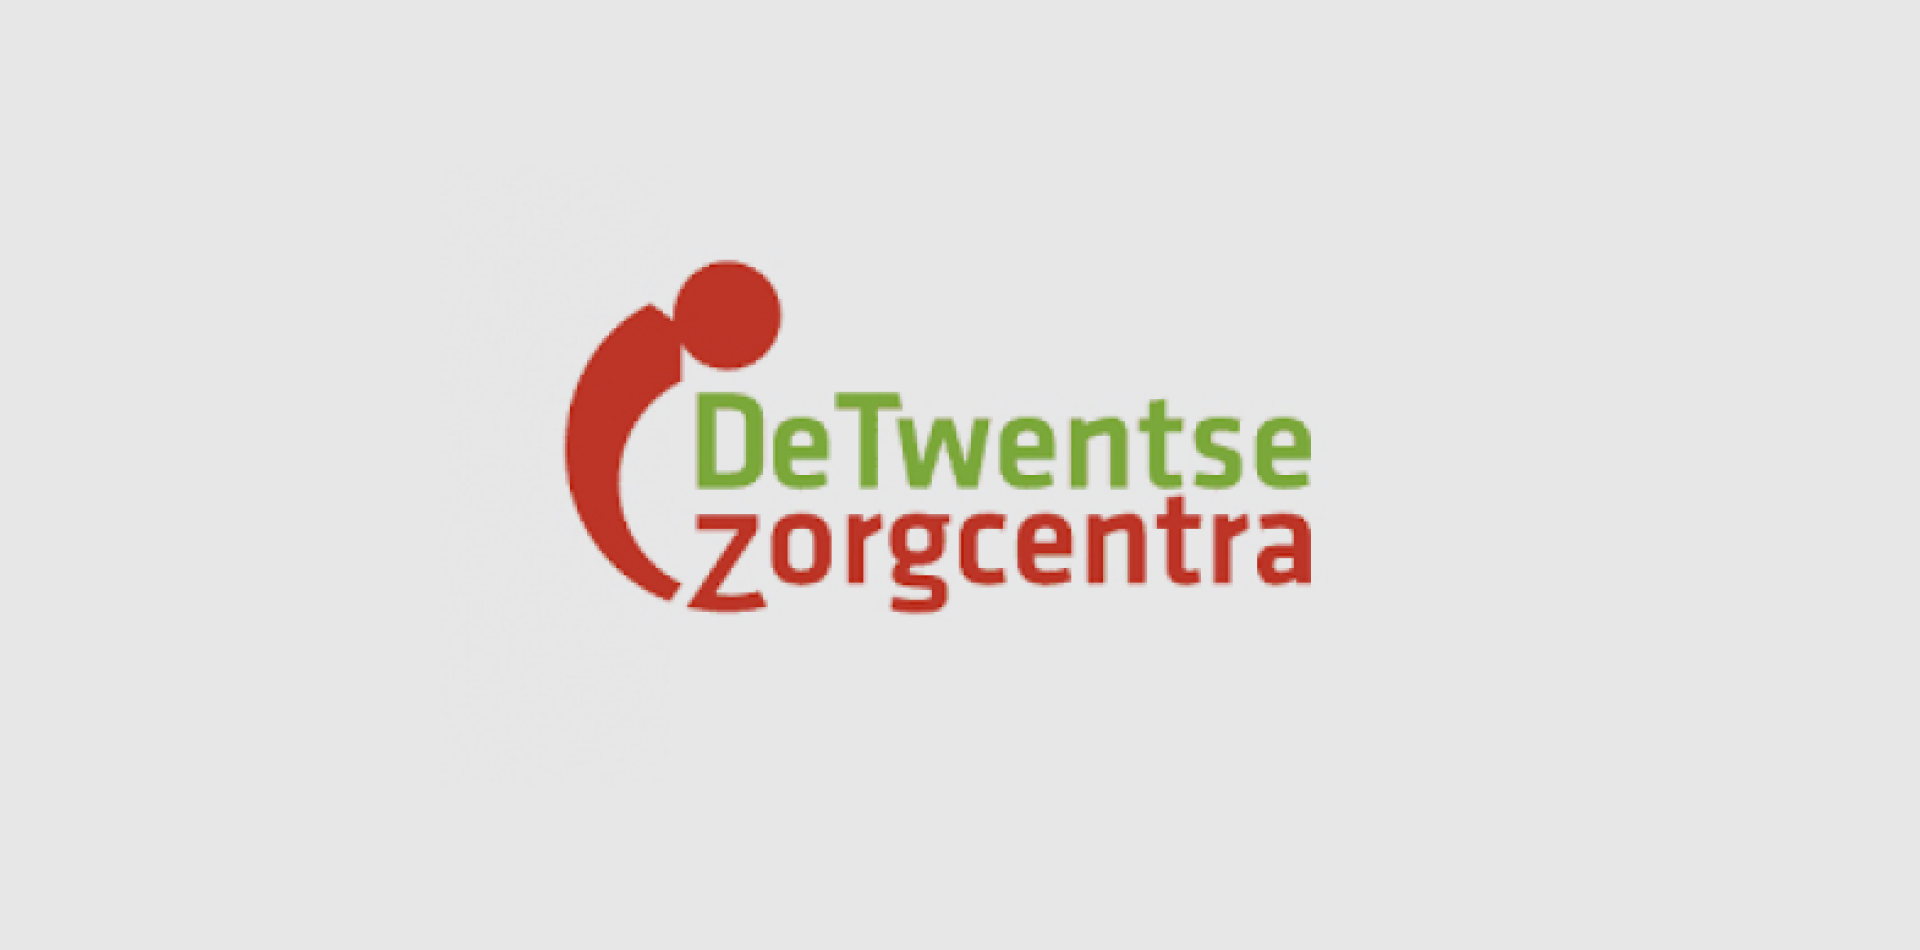 Twentse_zorgcentra-90e2b65c Services | F2Connect